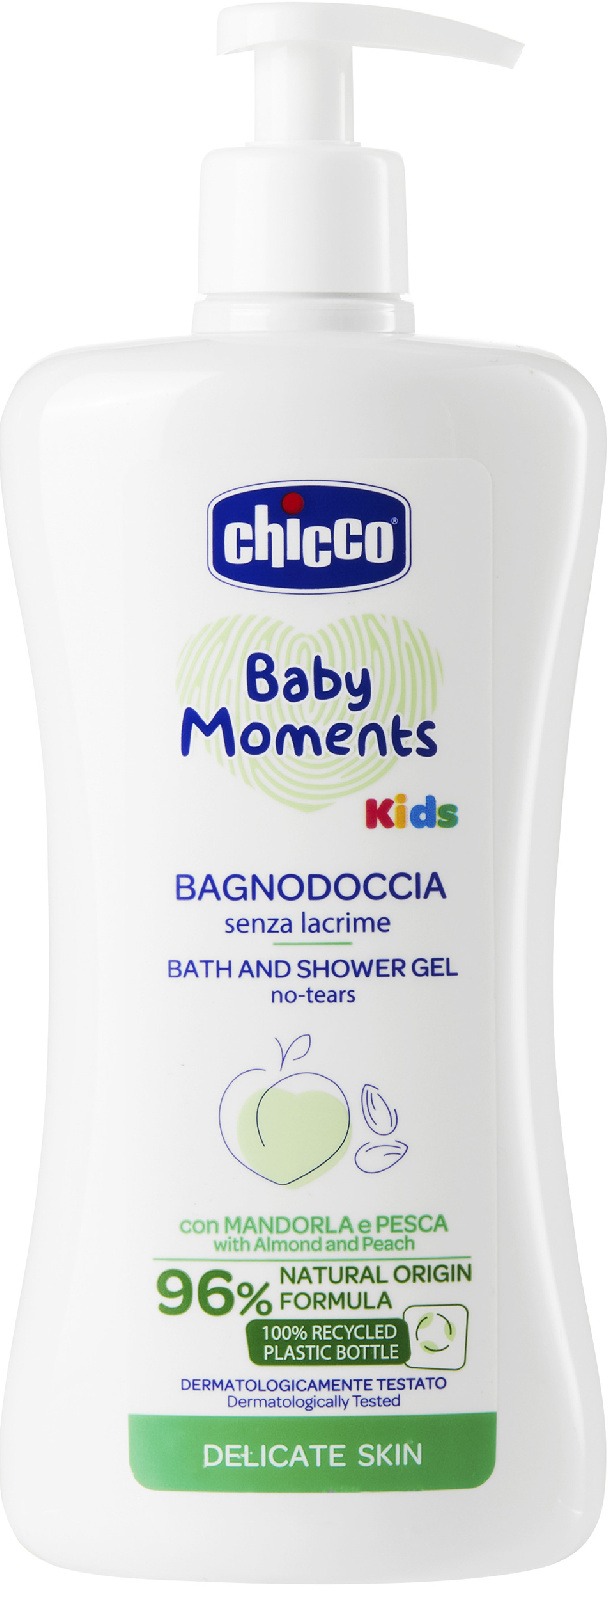 Пена для ванны и гель для душа Chicco Baby Moments 0м+, 500 мл